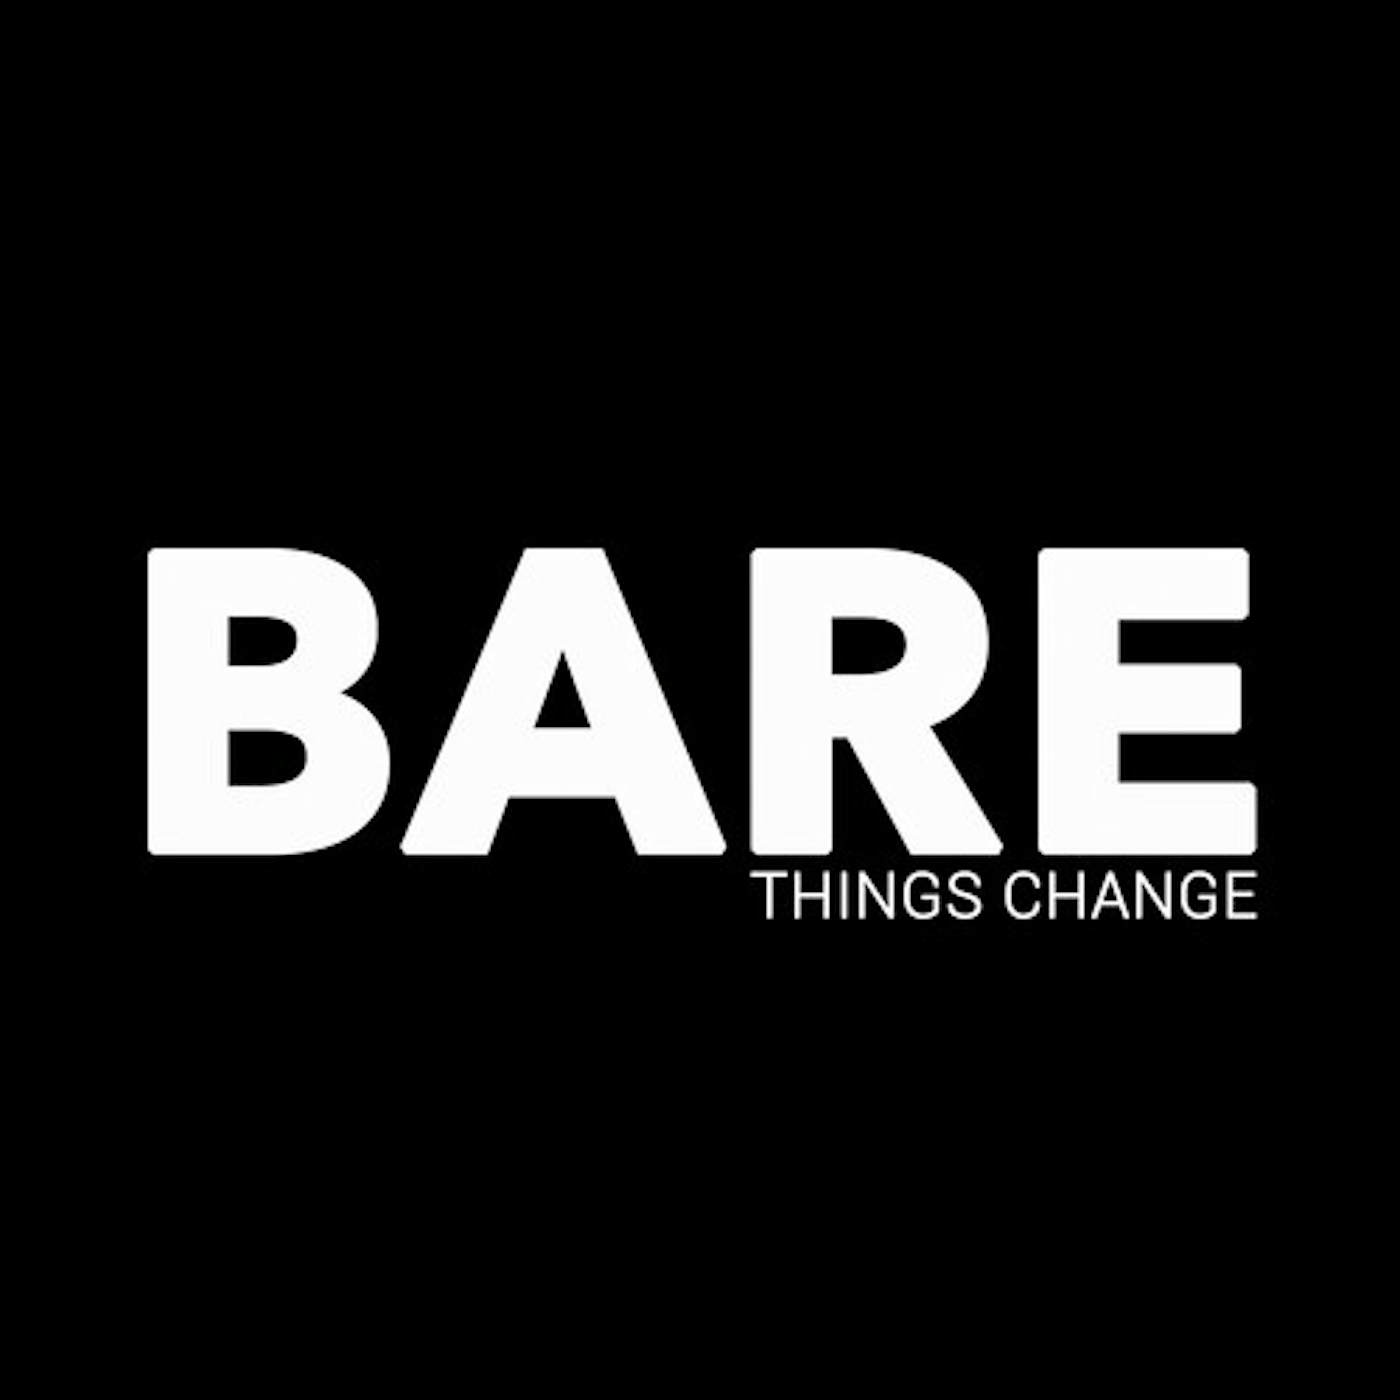 Bobby Bare Things Change Vinyl Record